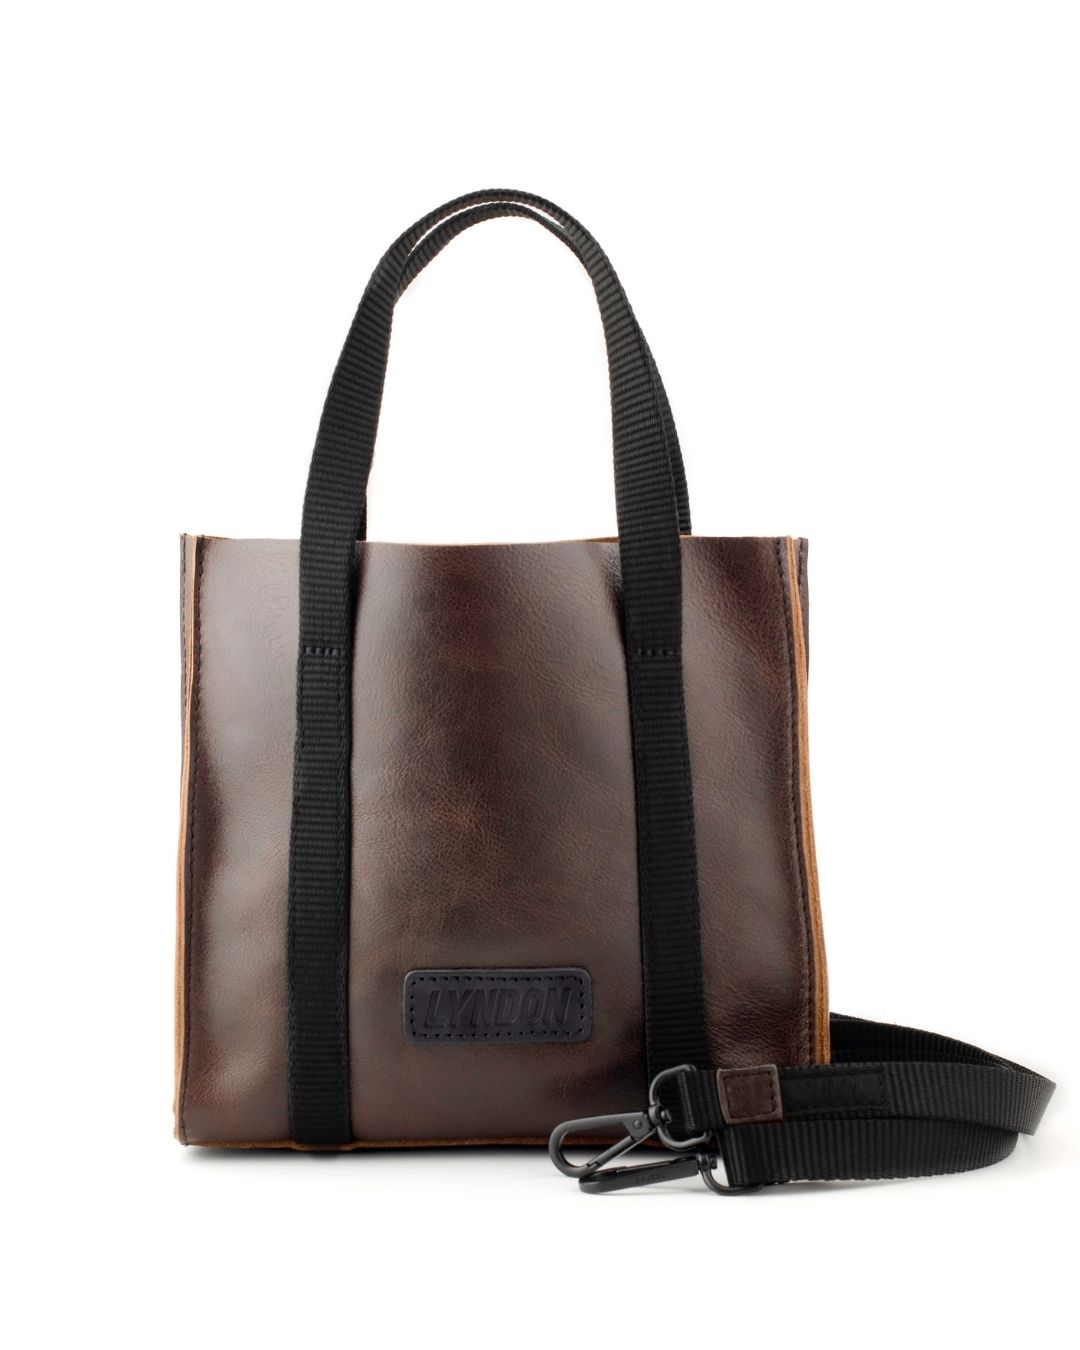 Vintage BALLY genuine wine suede leather clutch bag, mini purse